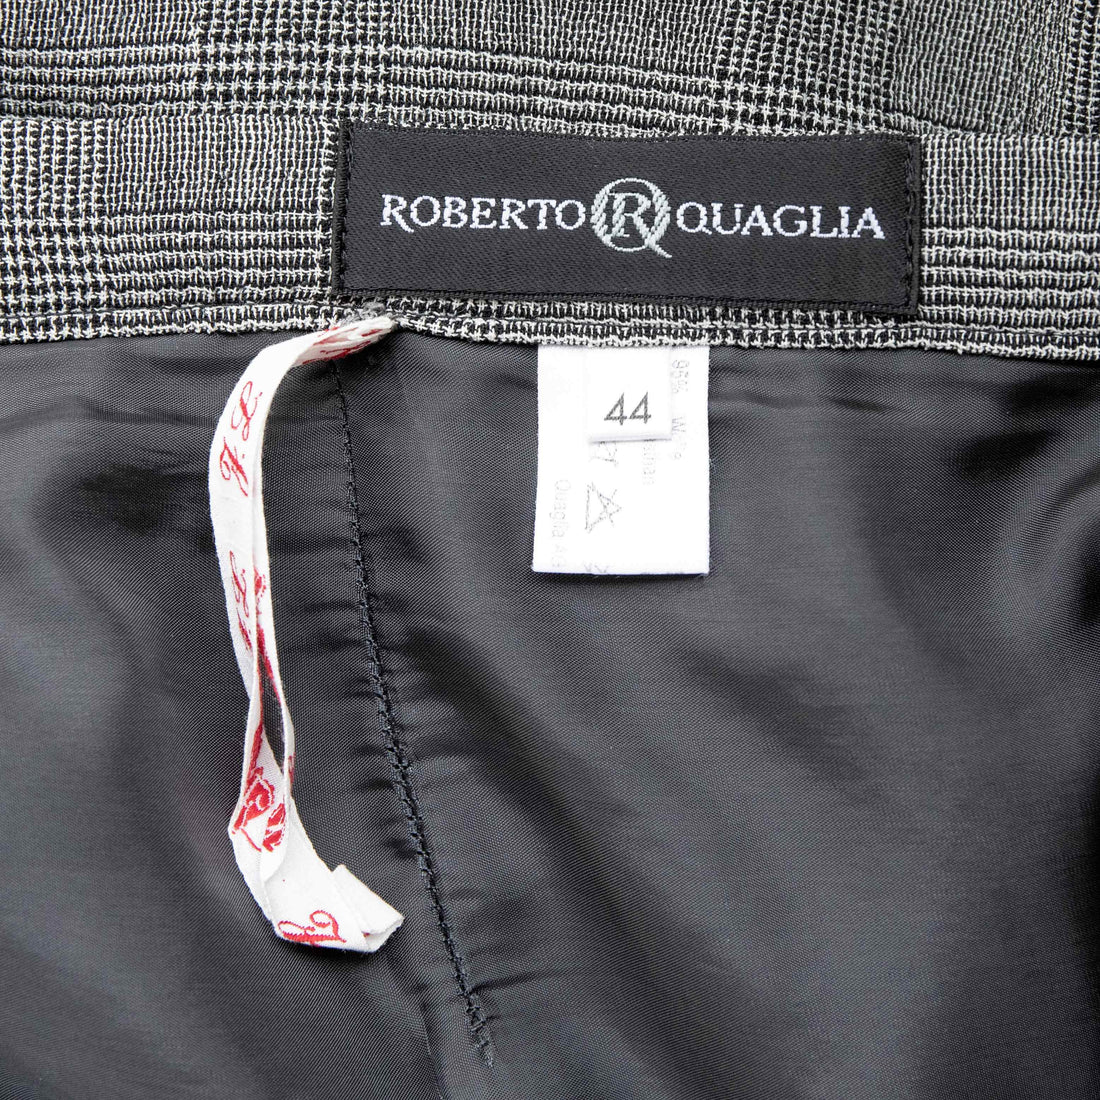 Roberto Quaglia Glencheck pant suit